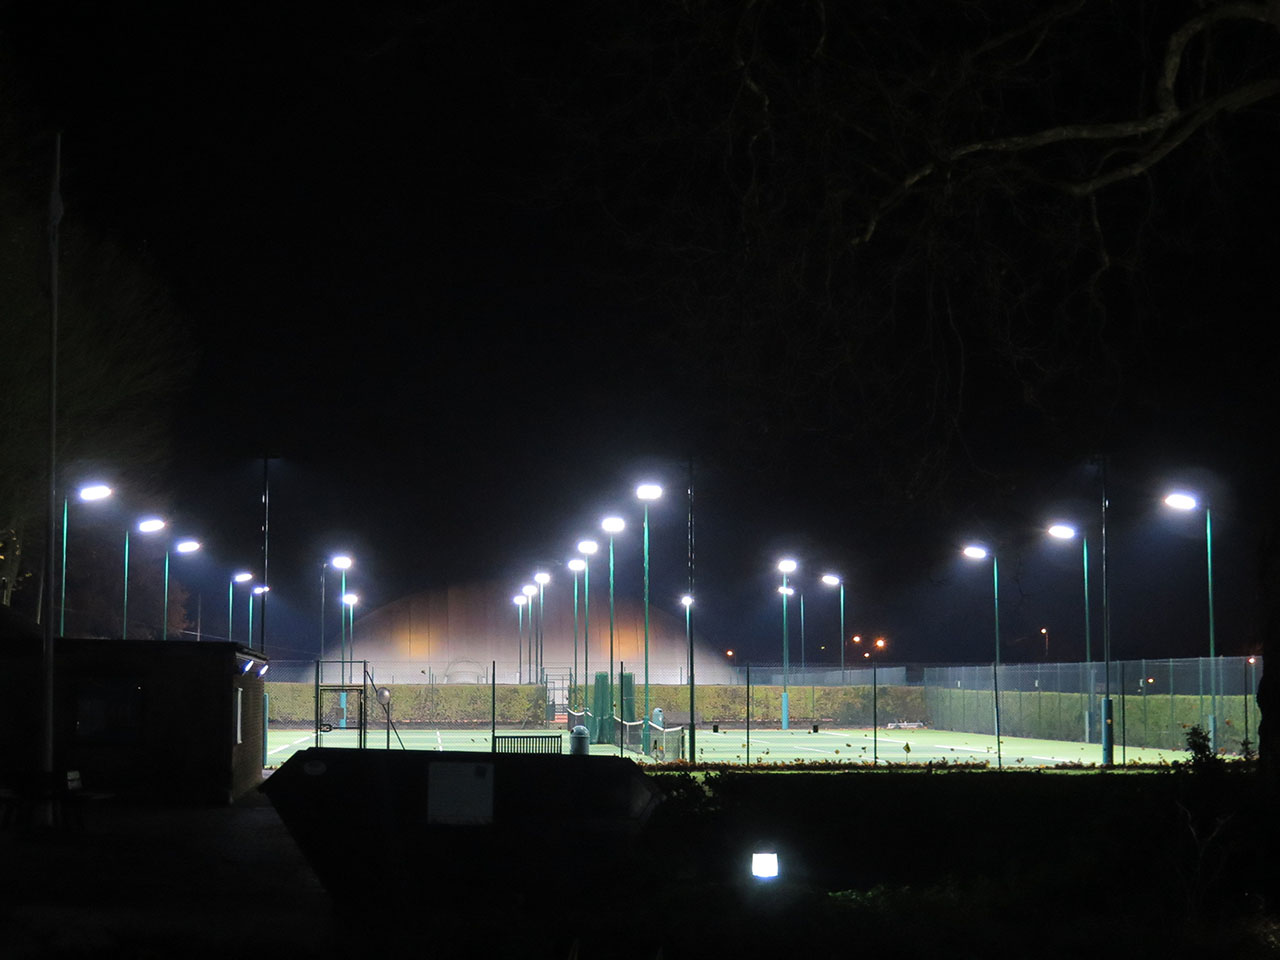 Roehampton Club - Artificial Grass Tennis Courts